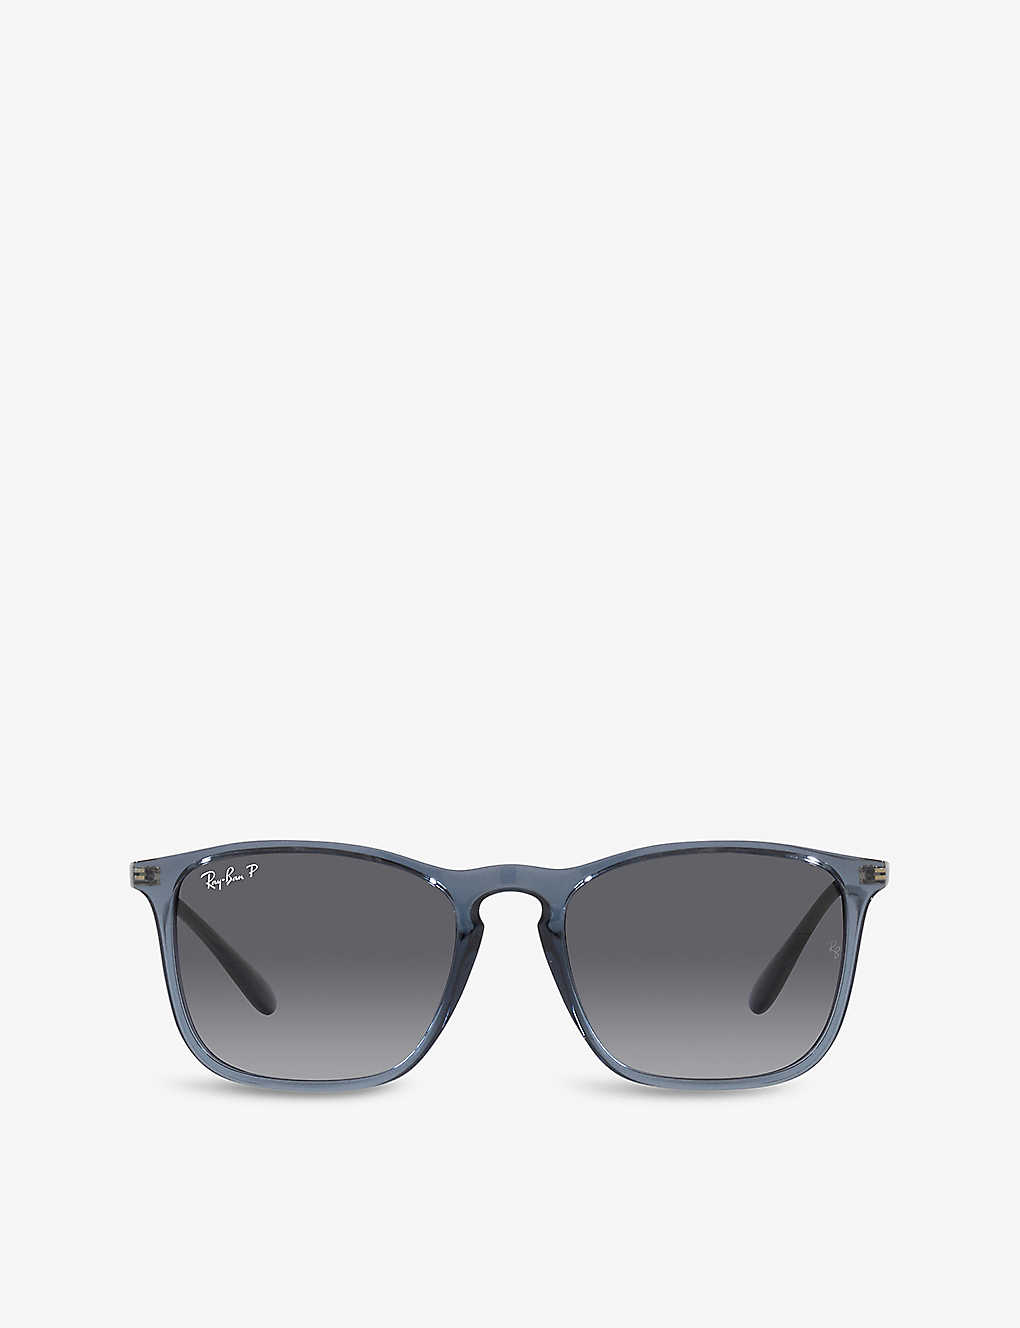 Ray Ban Chris Sunglasses Gold Frame Grey Lenses Polarized 54-18